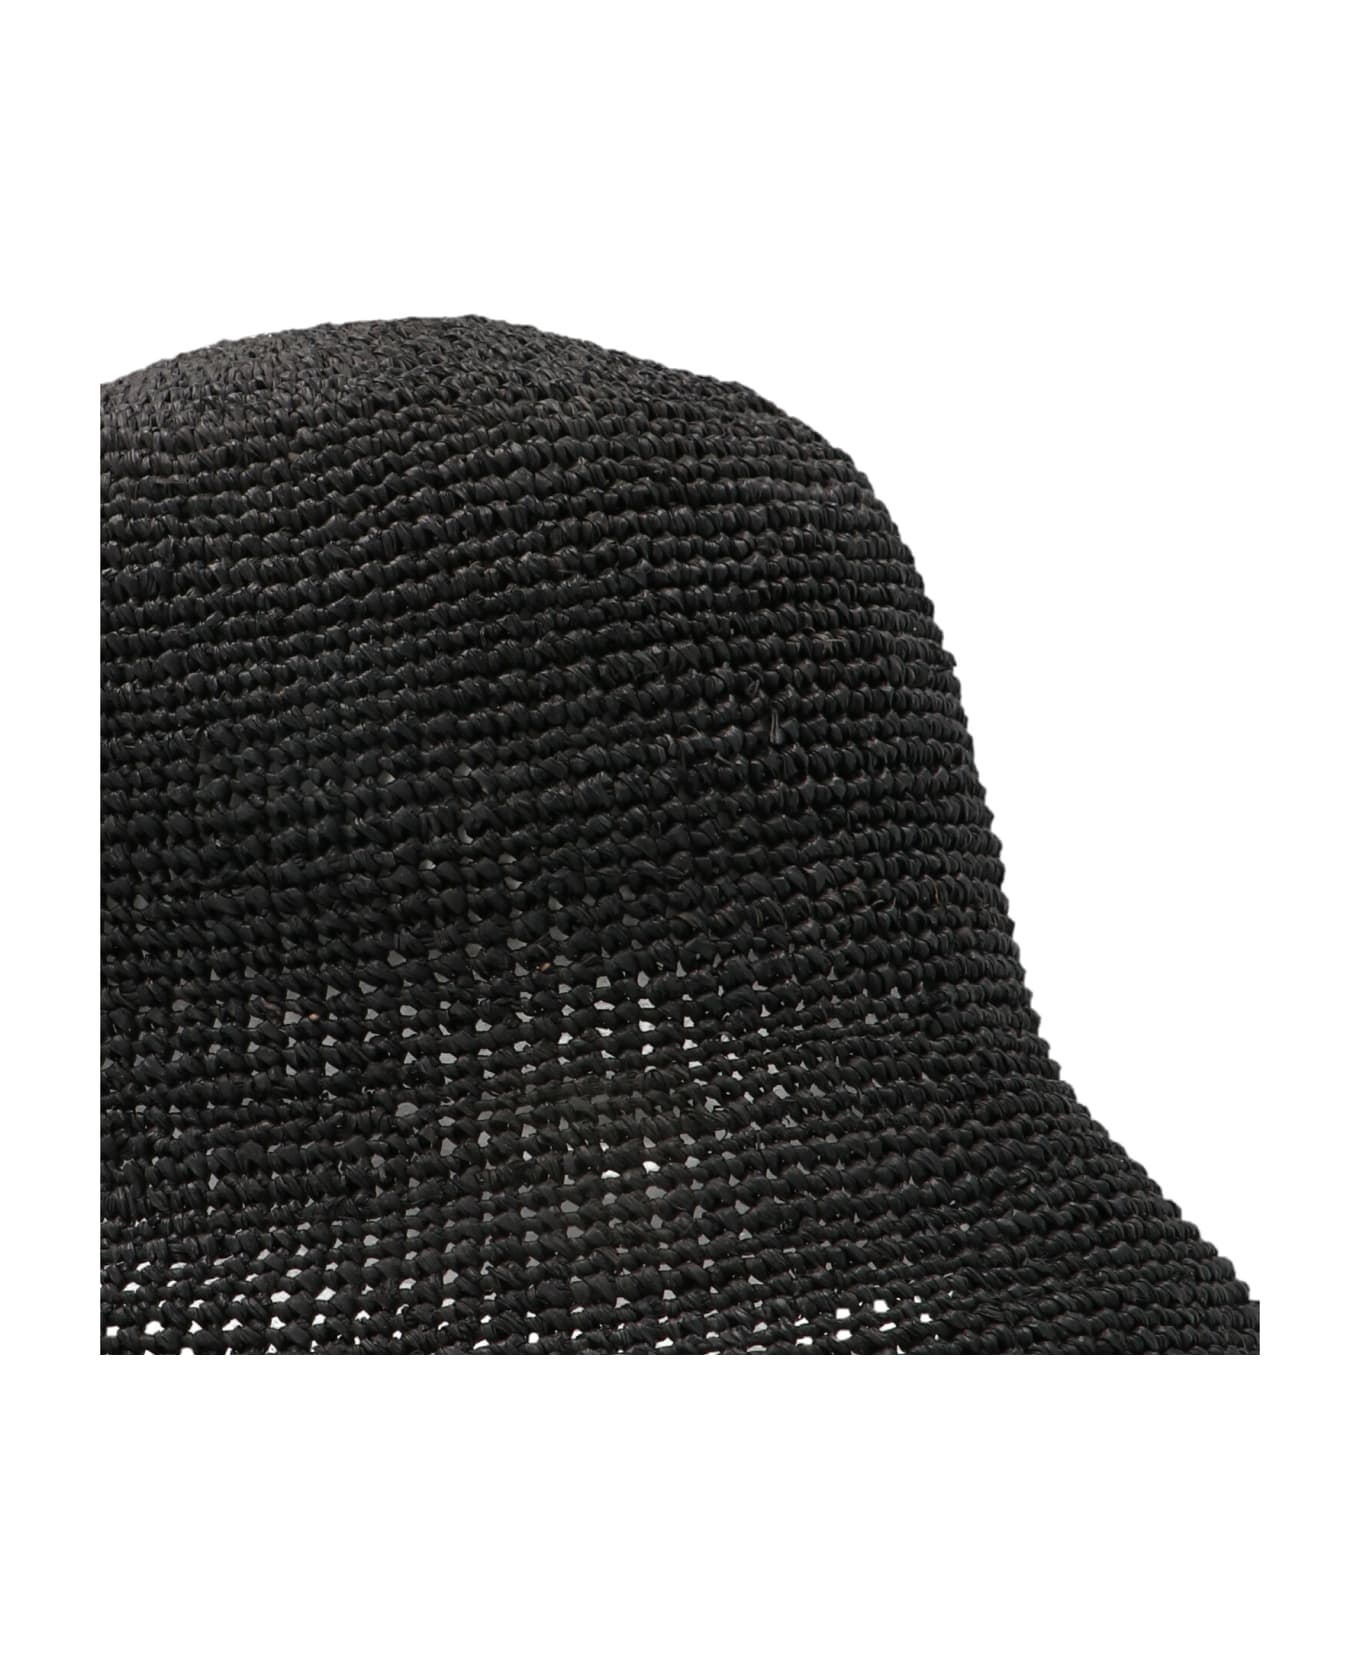 Ibeliv Andao Bucket Hat - Black  